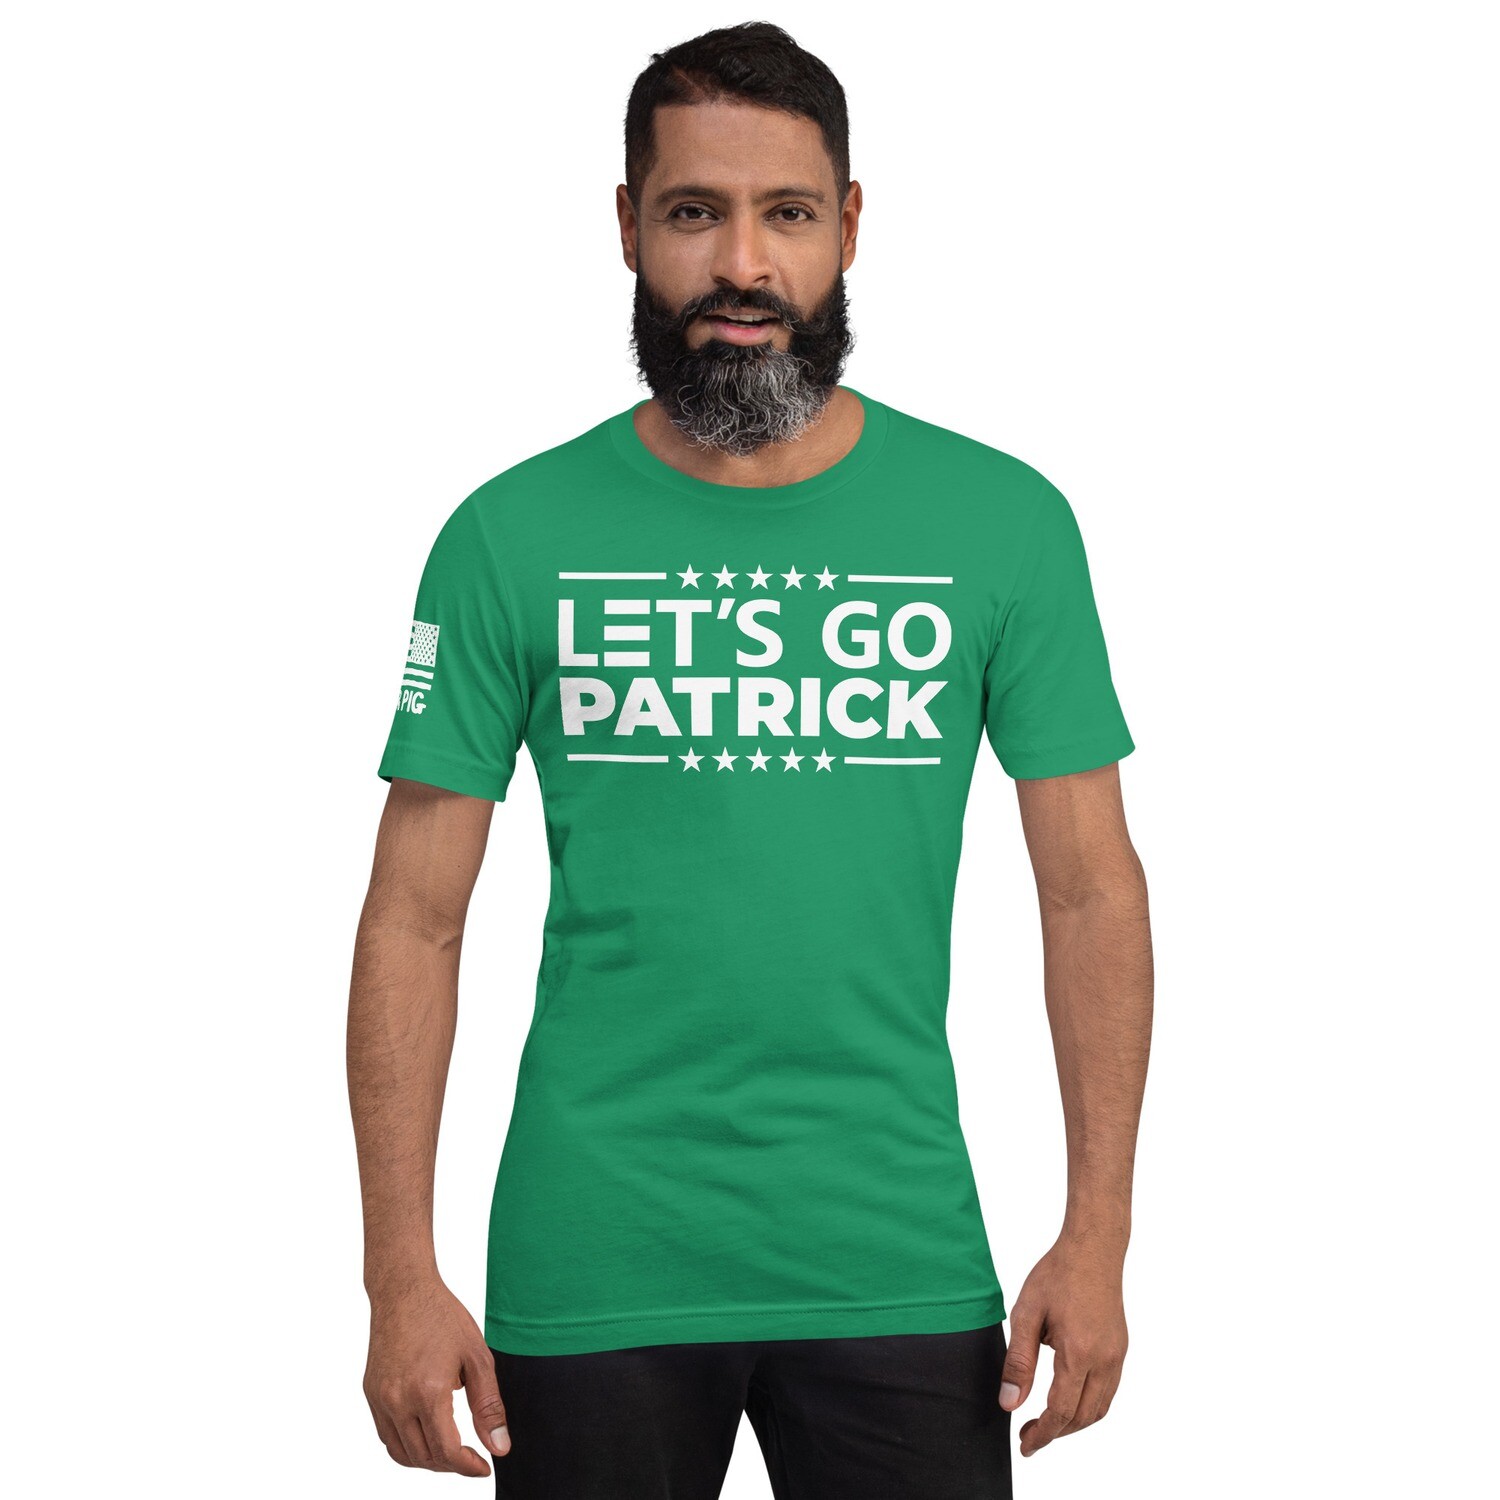 WAR PIG LET'S GO PATRICK - ST' PATRICK'S DAY GIFT - Short-Sleeve Mens/Unisex T-Shirt